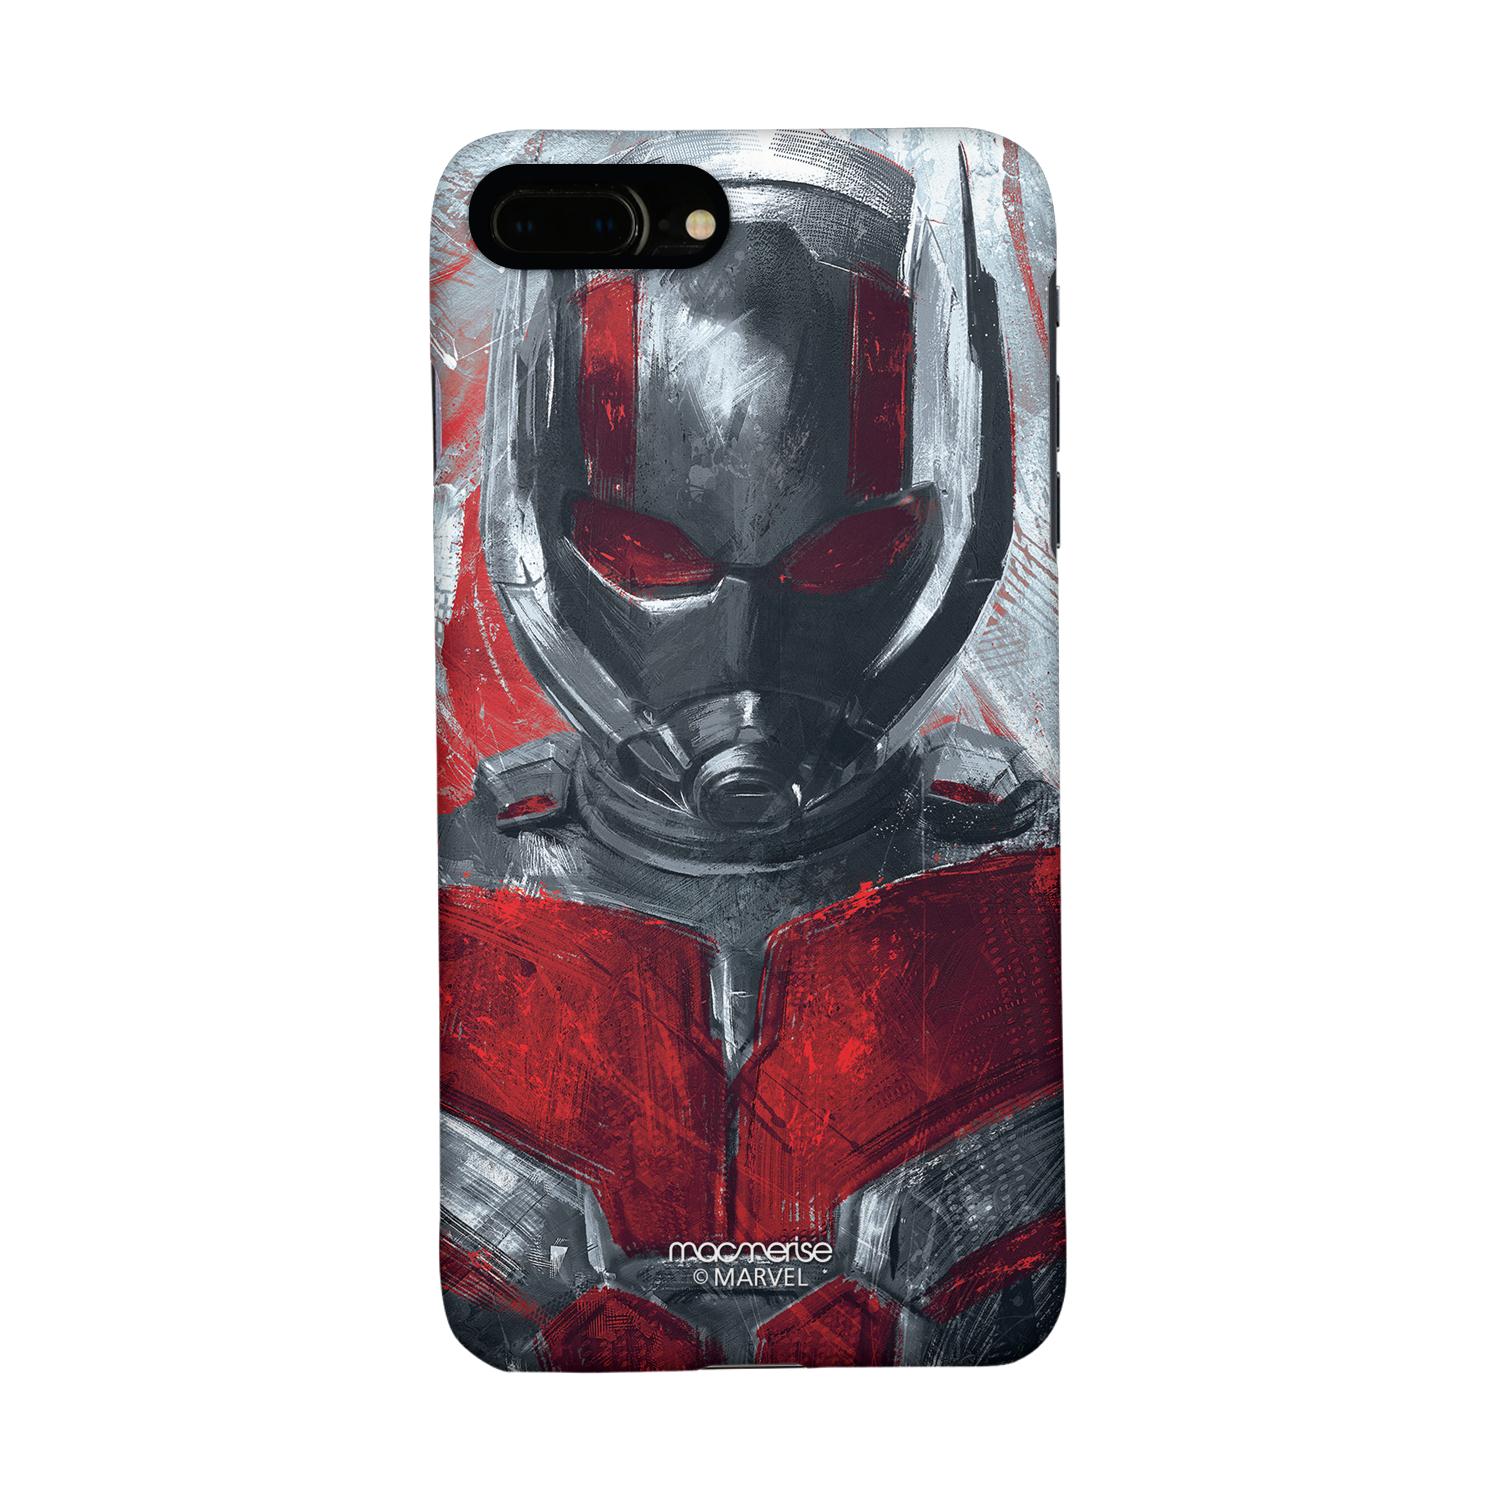 Buy Charcoal Art Antman - Sleek Phone Case for iPhone 7 Plus Online